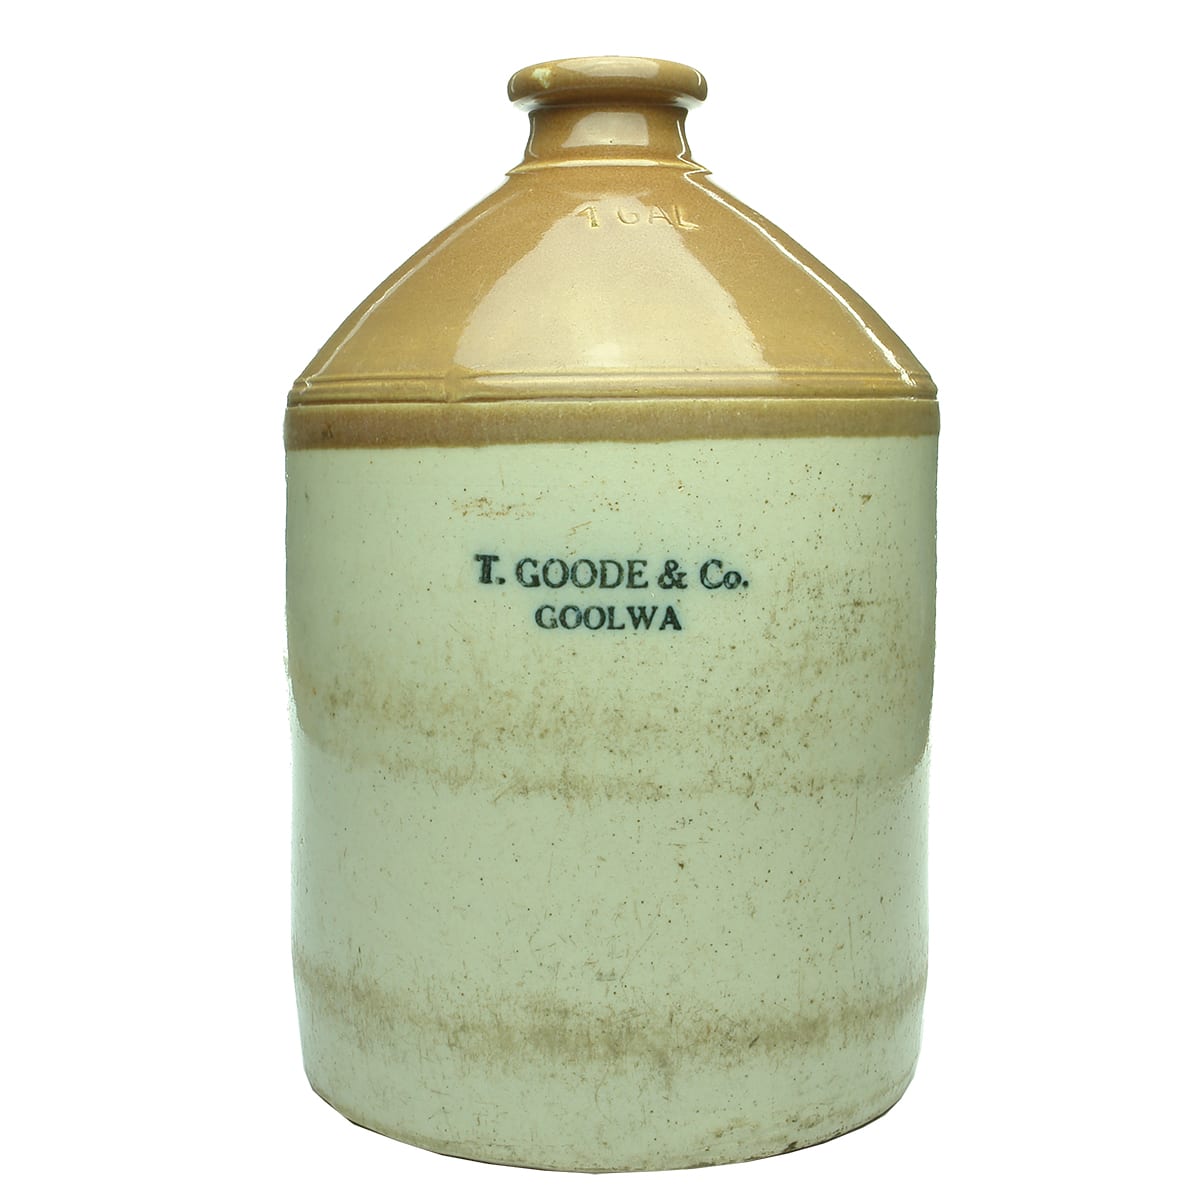 Demijohn. T. Goode & Co., Goolwa. 1 Gallon. (South Australia)